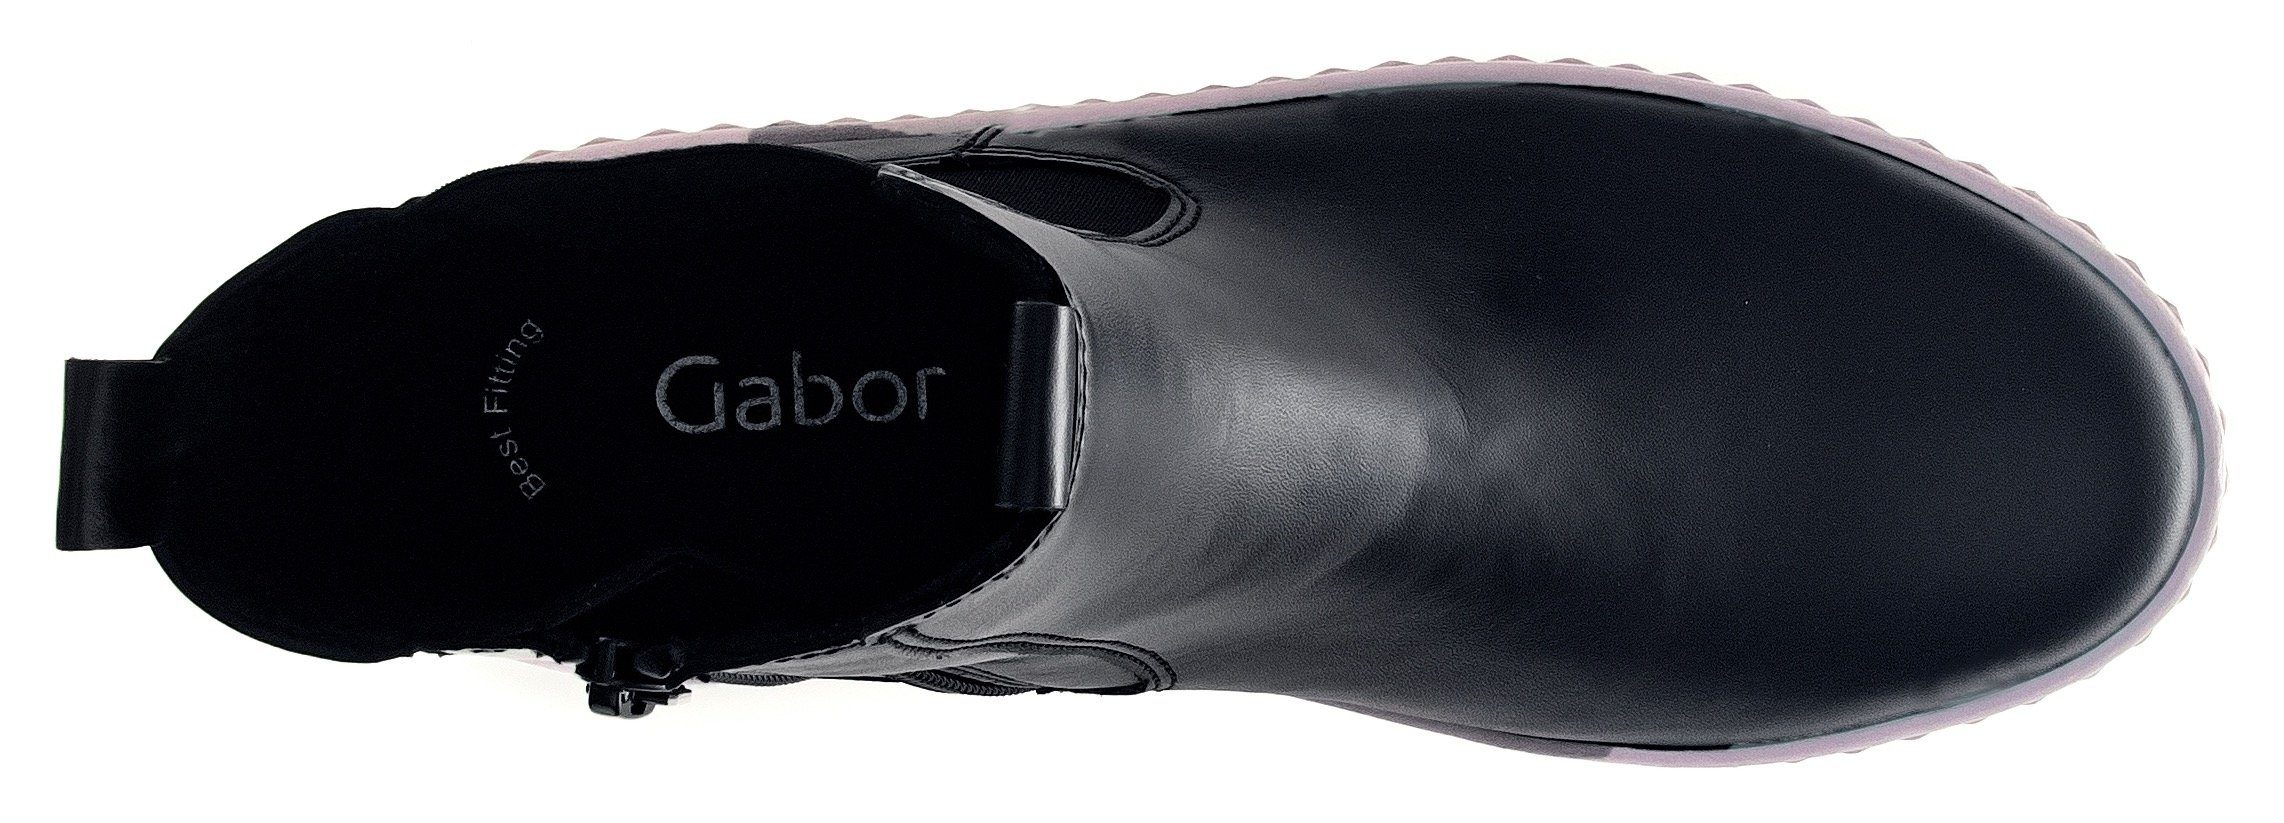 Chelseaboots Plateausohle schwarz kontrastfarbiger mit Gabor